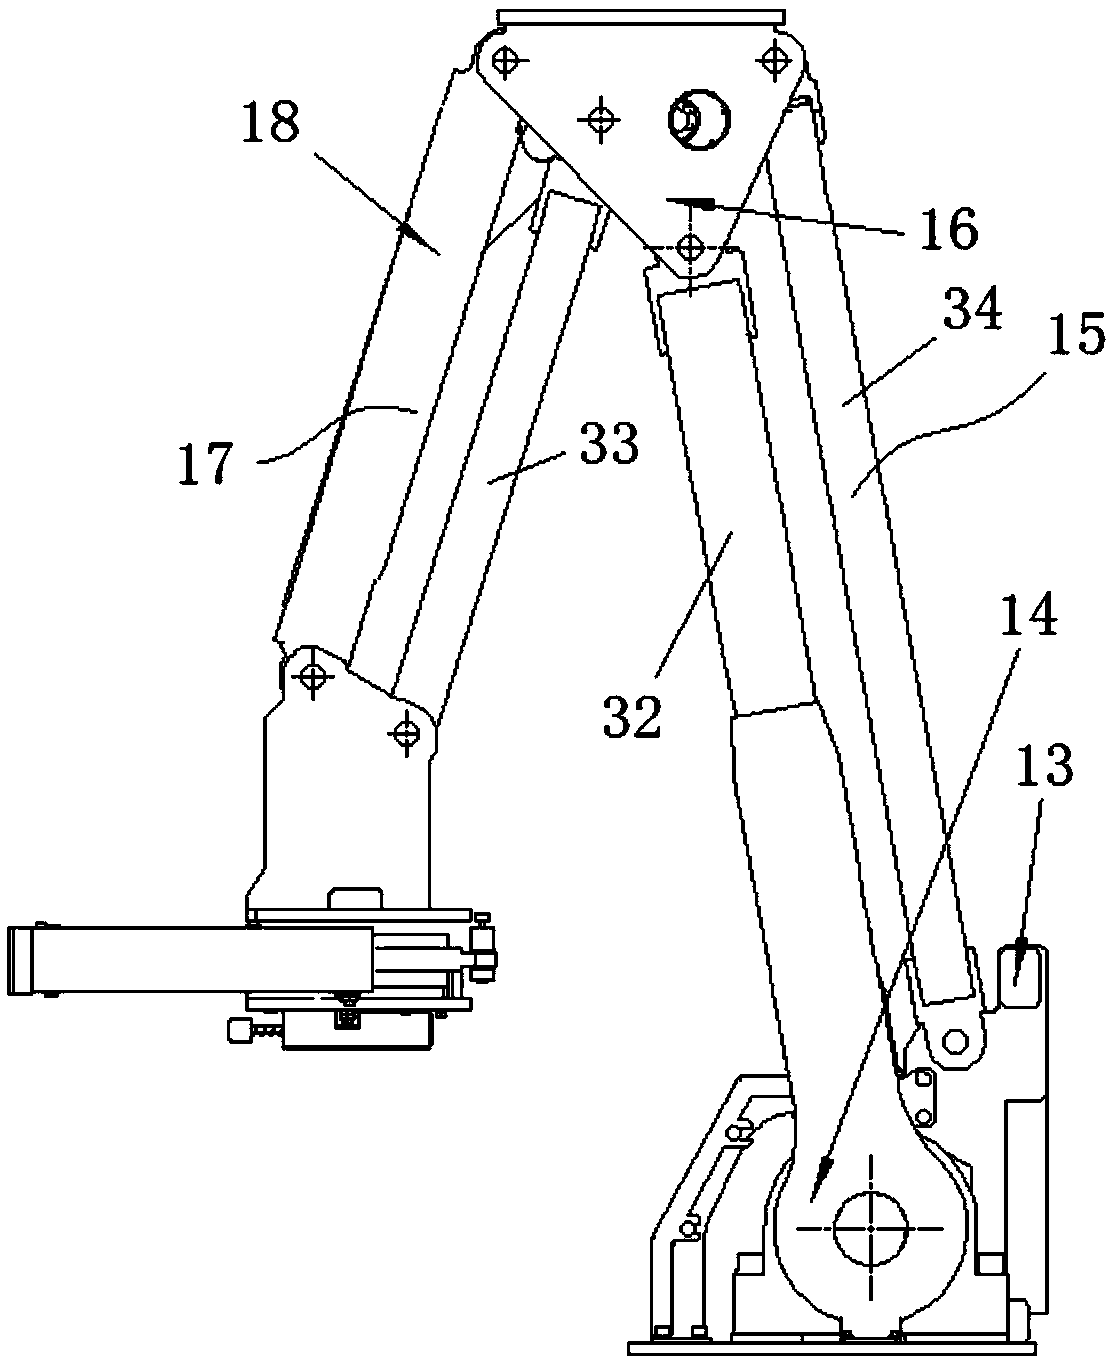 Rig drill floor pipe arranging robot